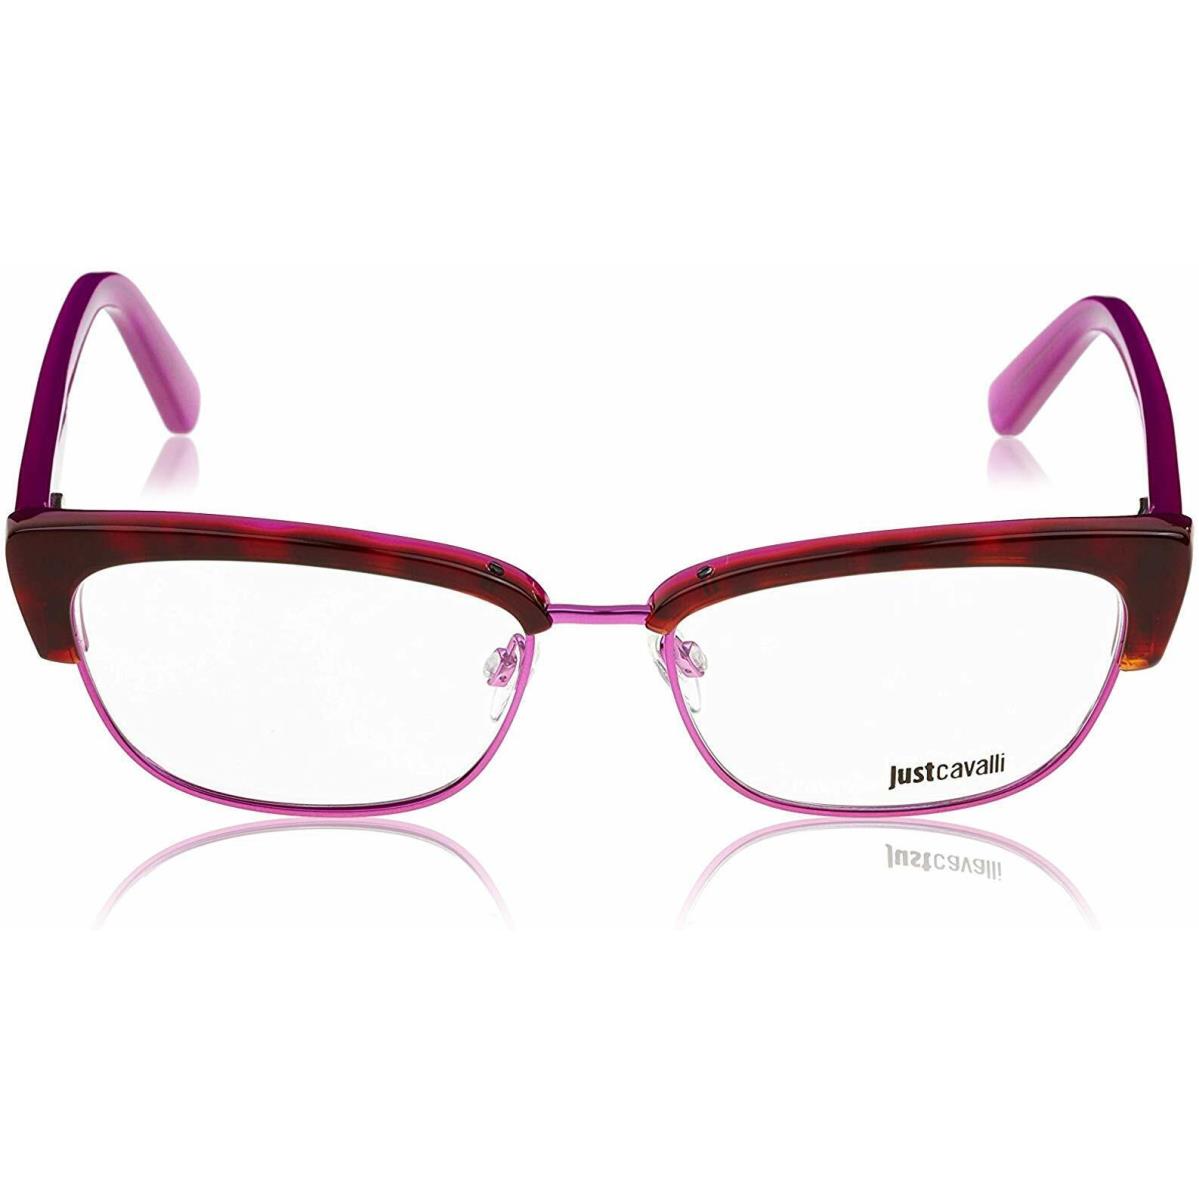 Just Cavalli JC0625 Purple Tortoise 056 Clubmaster Eyeglasses Frames 54-16-140